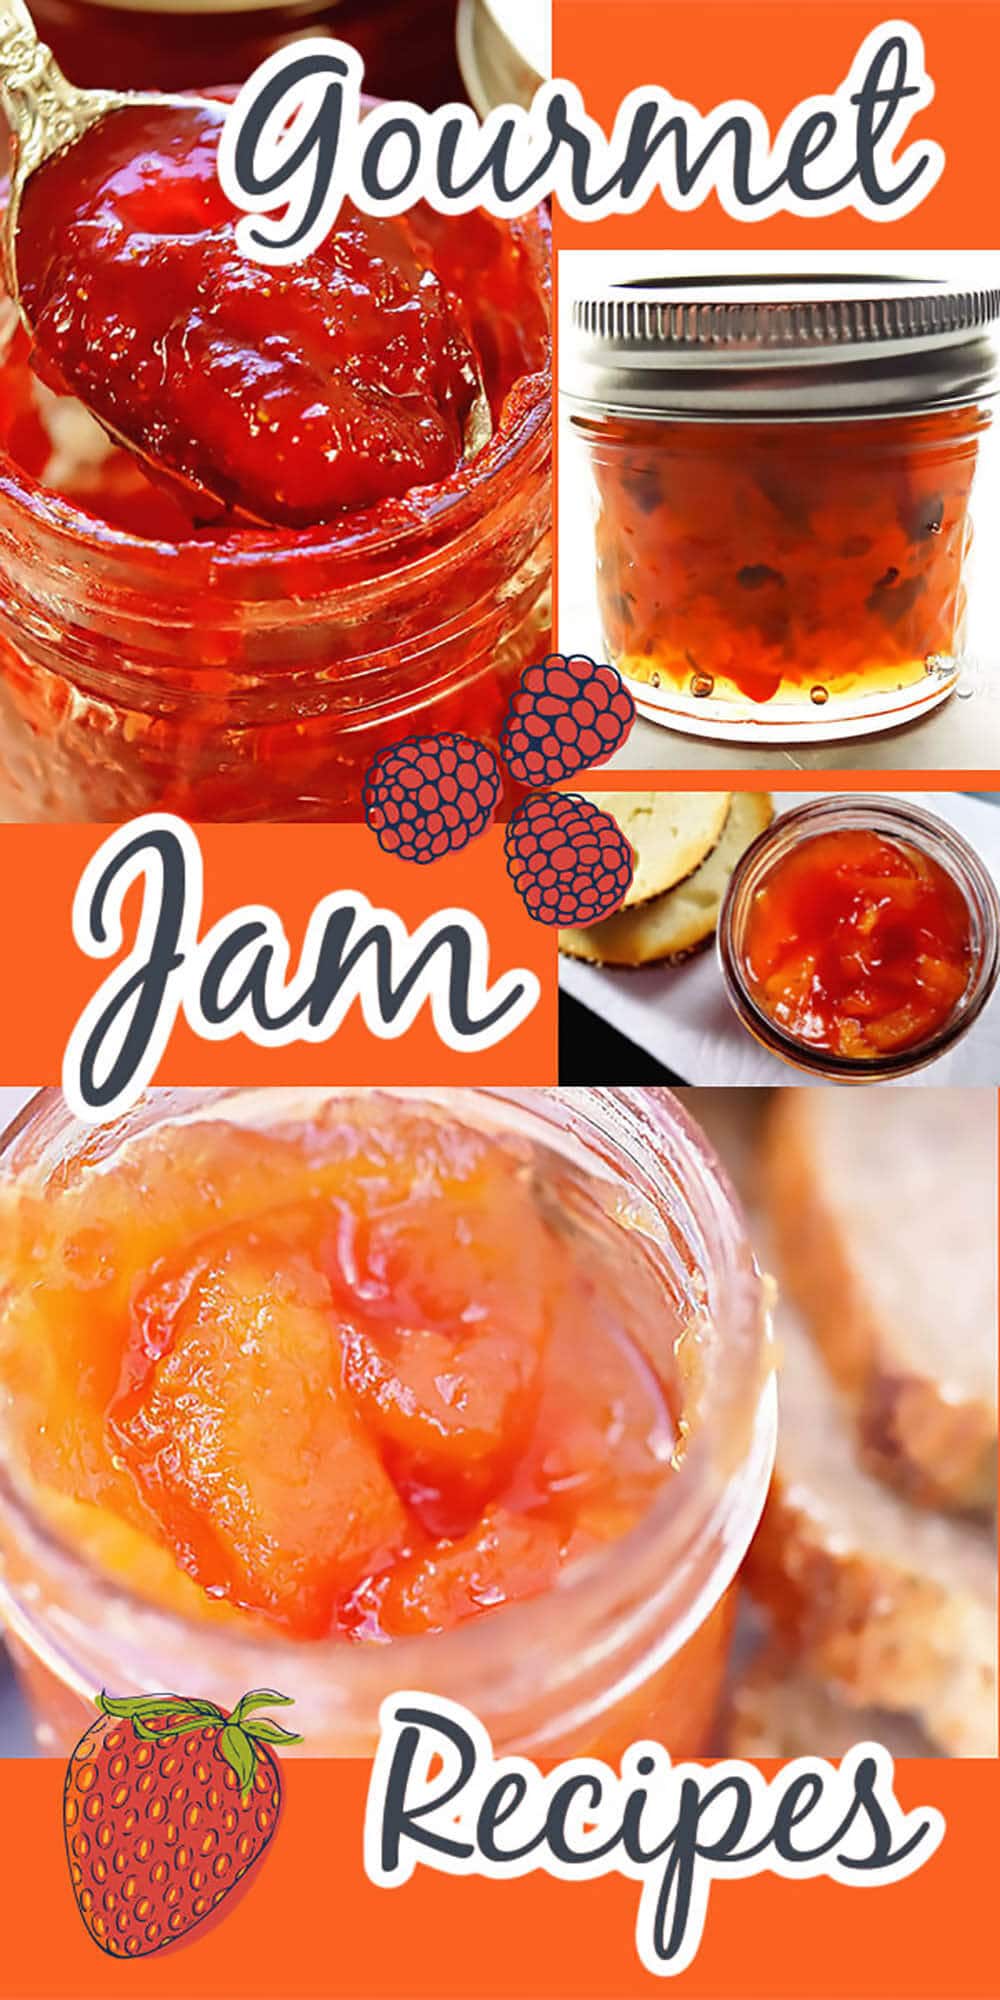 Photos of Gourmet Jam Recipes, with Pinterest overlay.